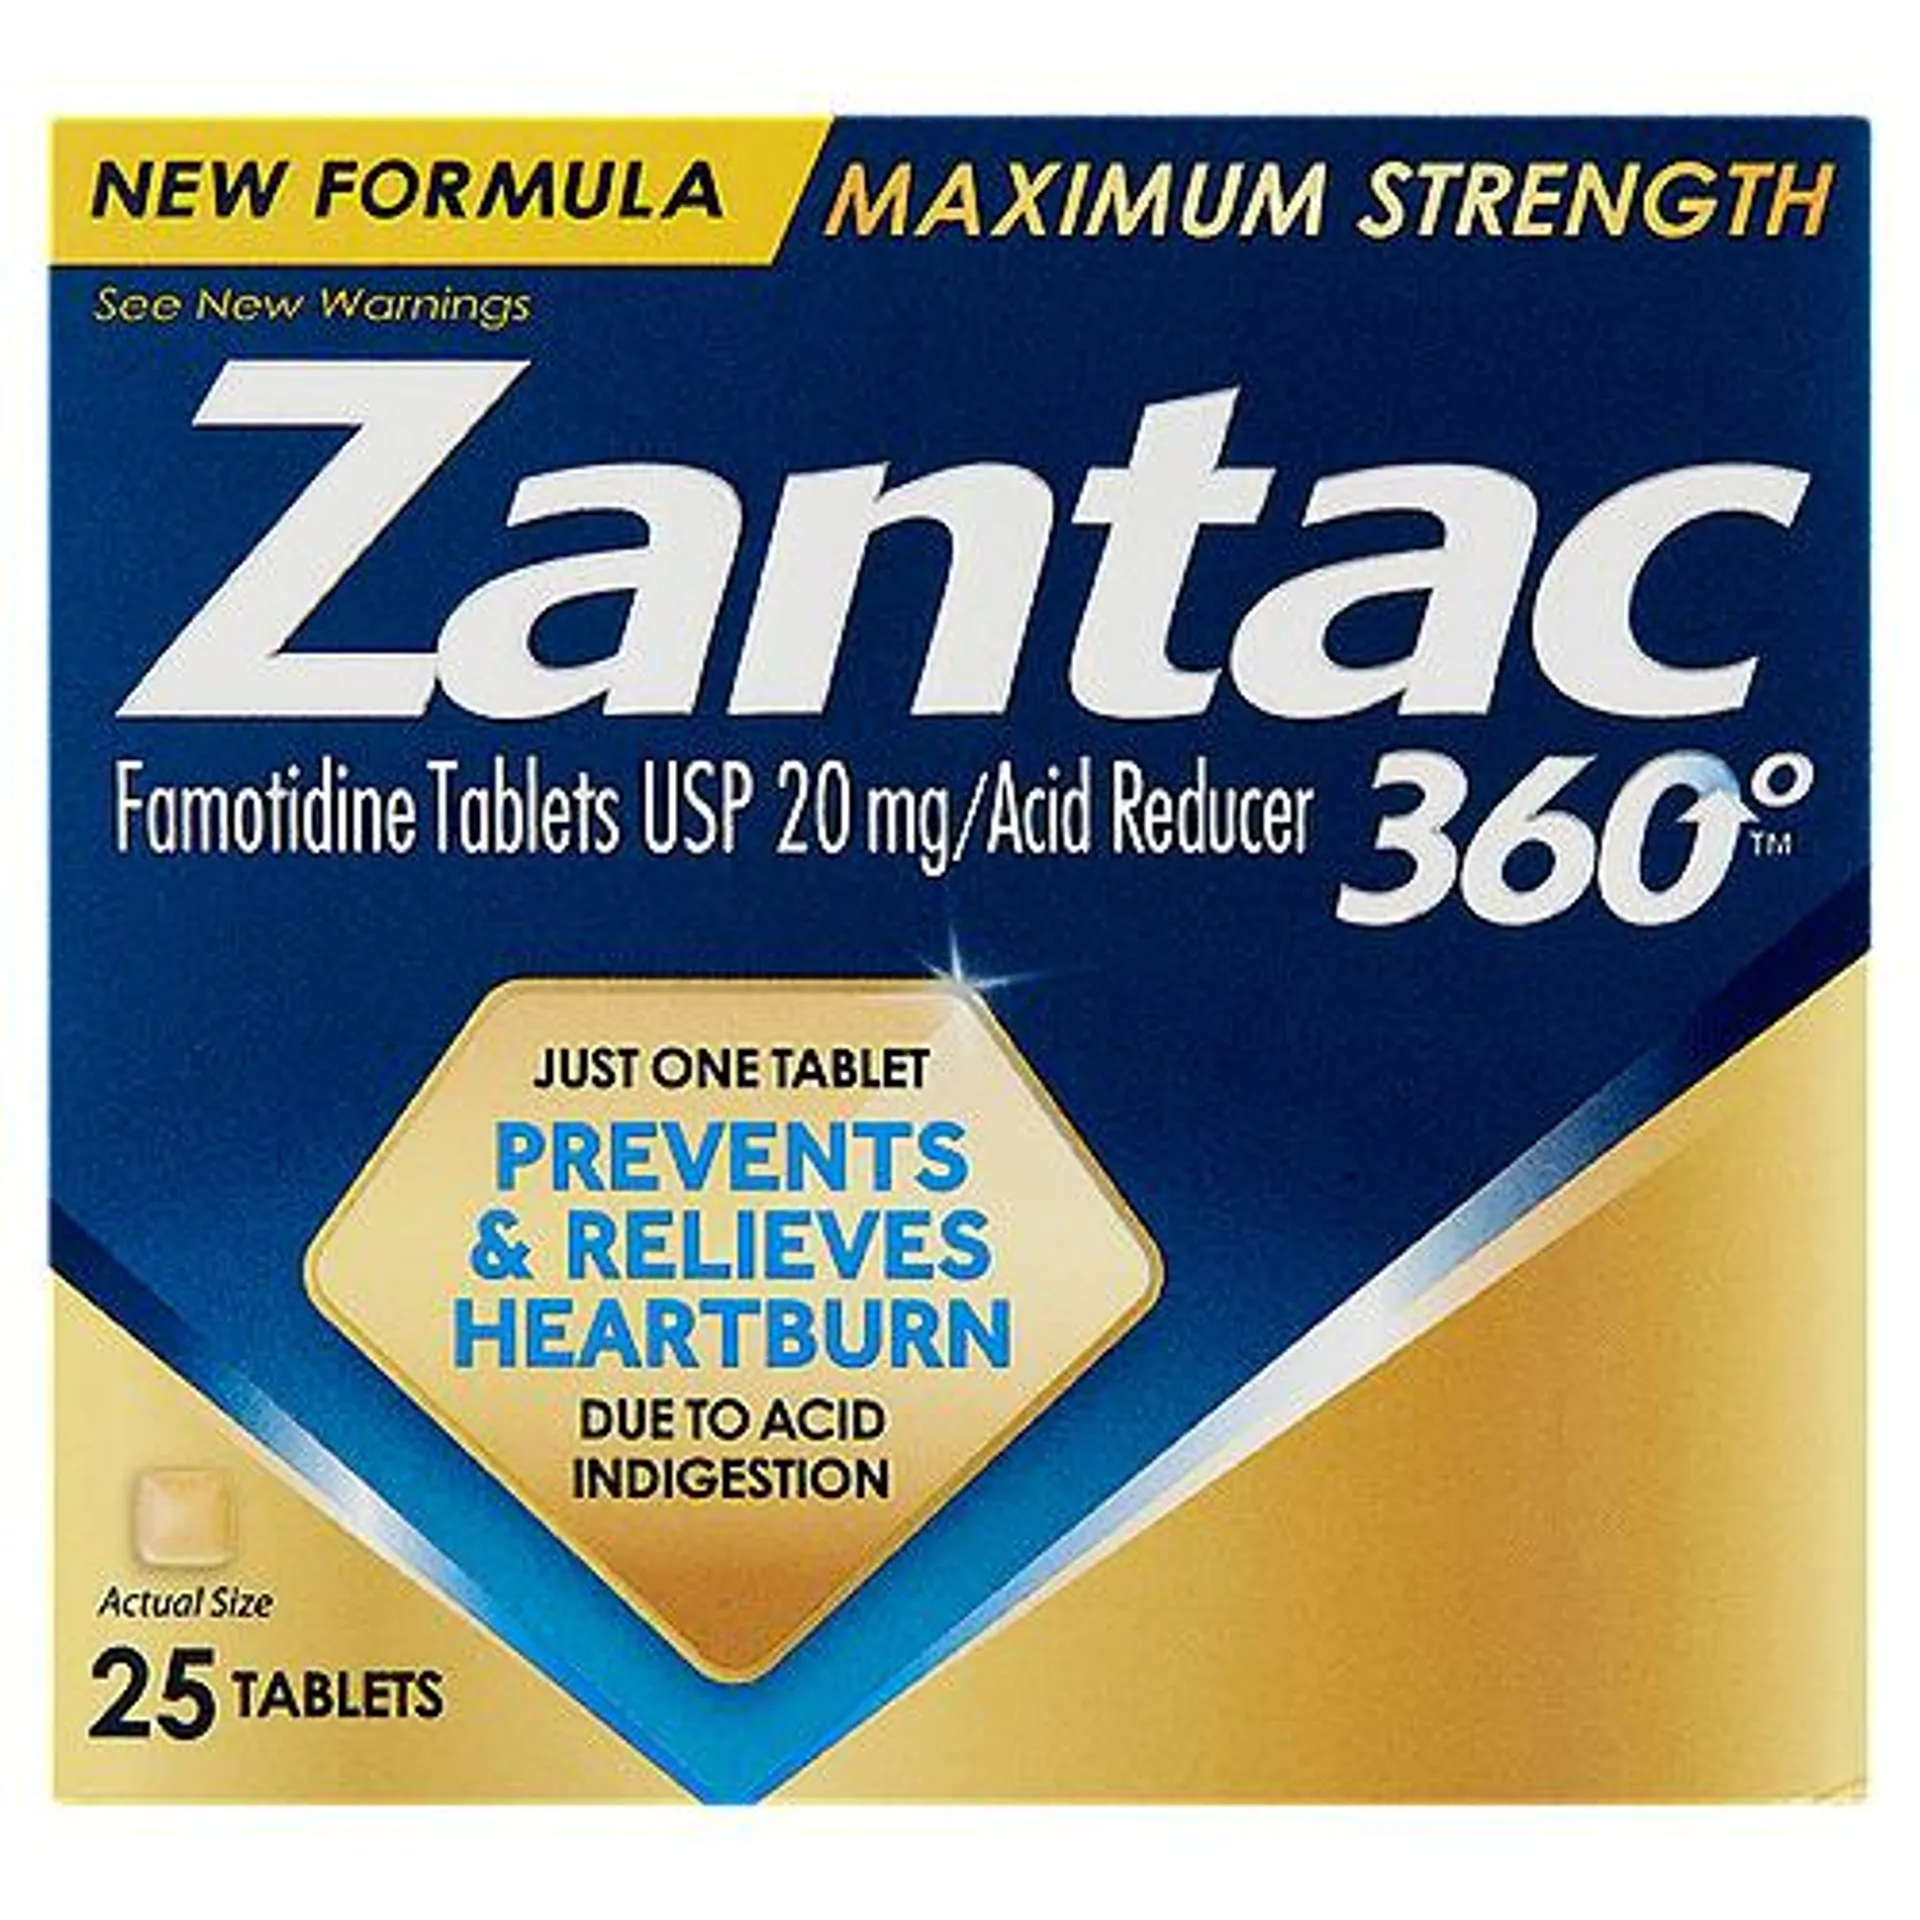 Zantac 360° Maximum Strength Famotidine USP 20 mg, Tablets, 25 Each